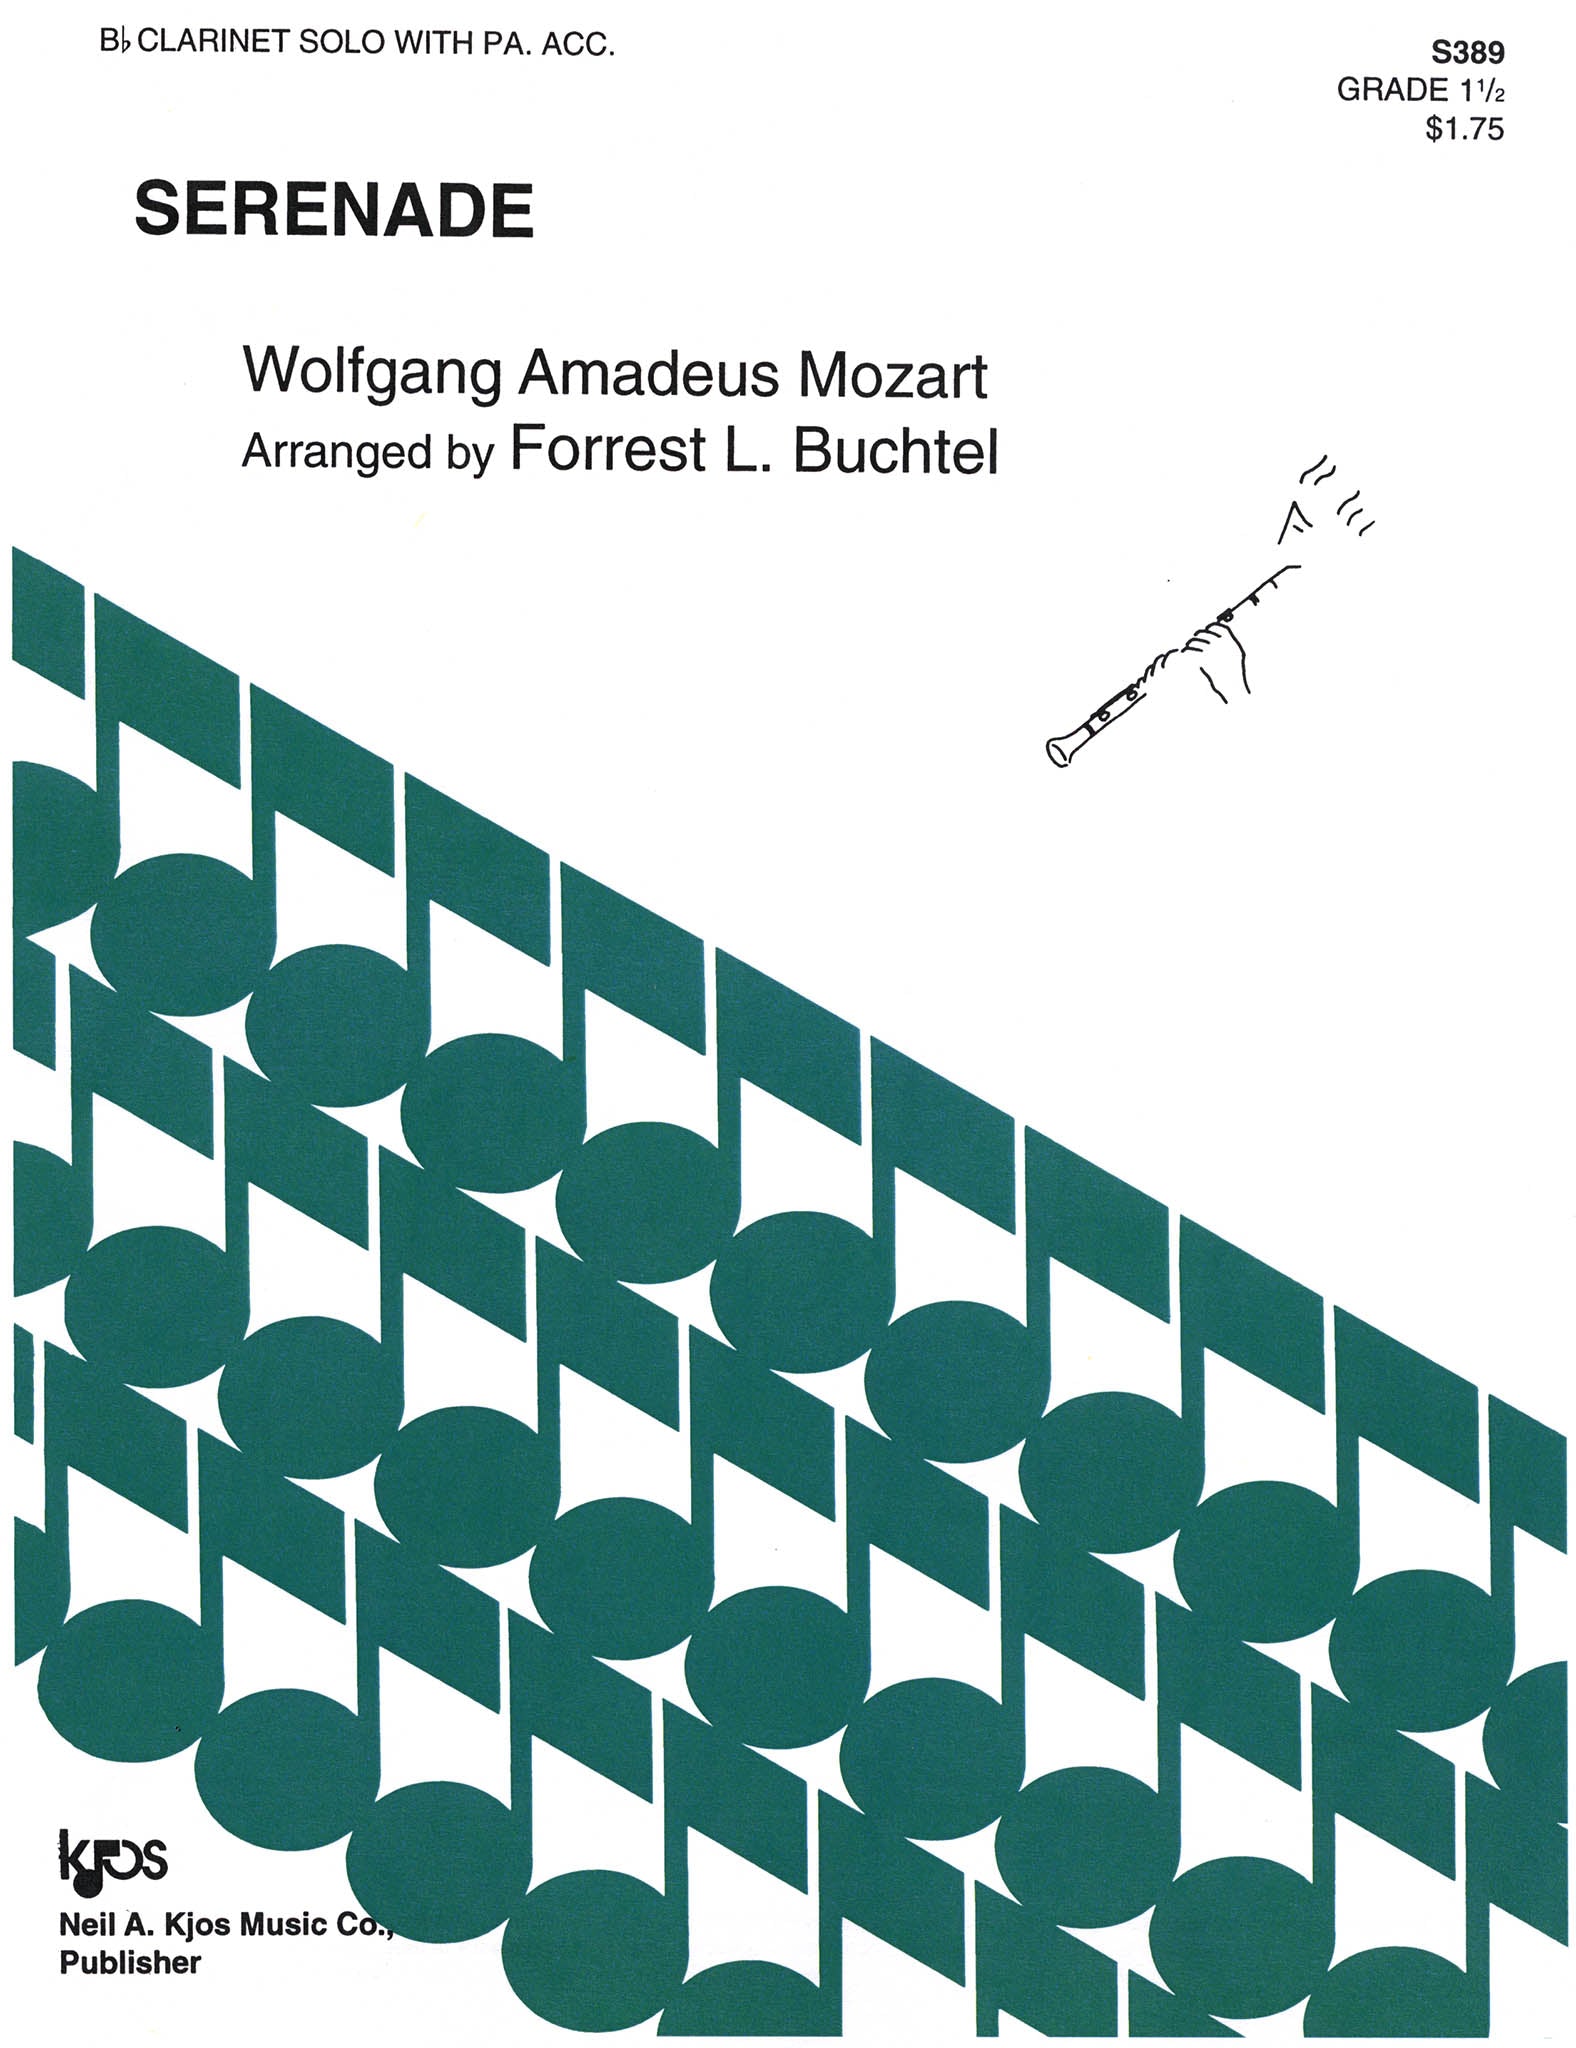 Movement 1 from Piano Sonata No. 11 in A Major, K. 331/300i Cover